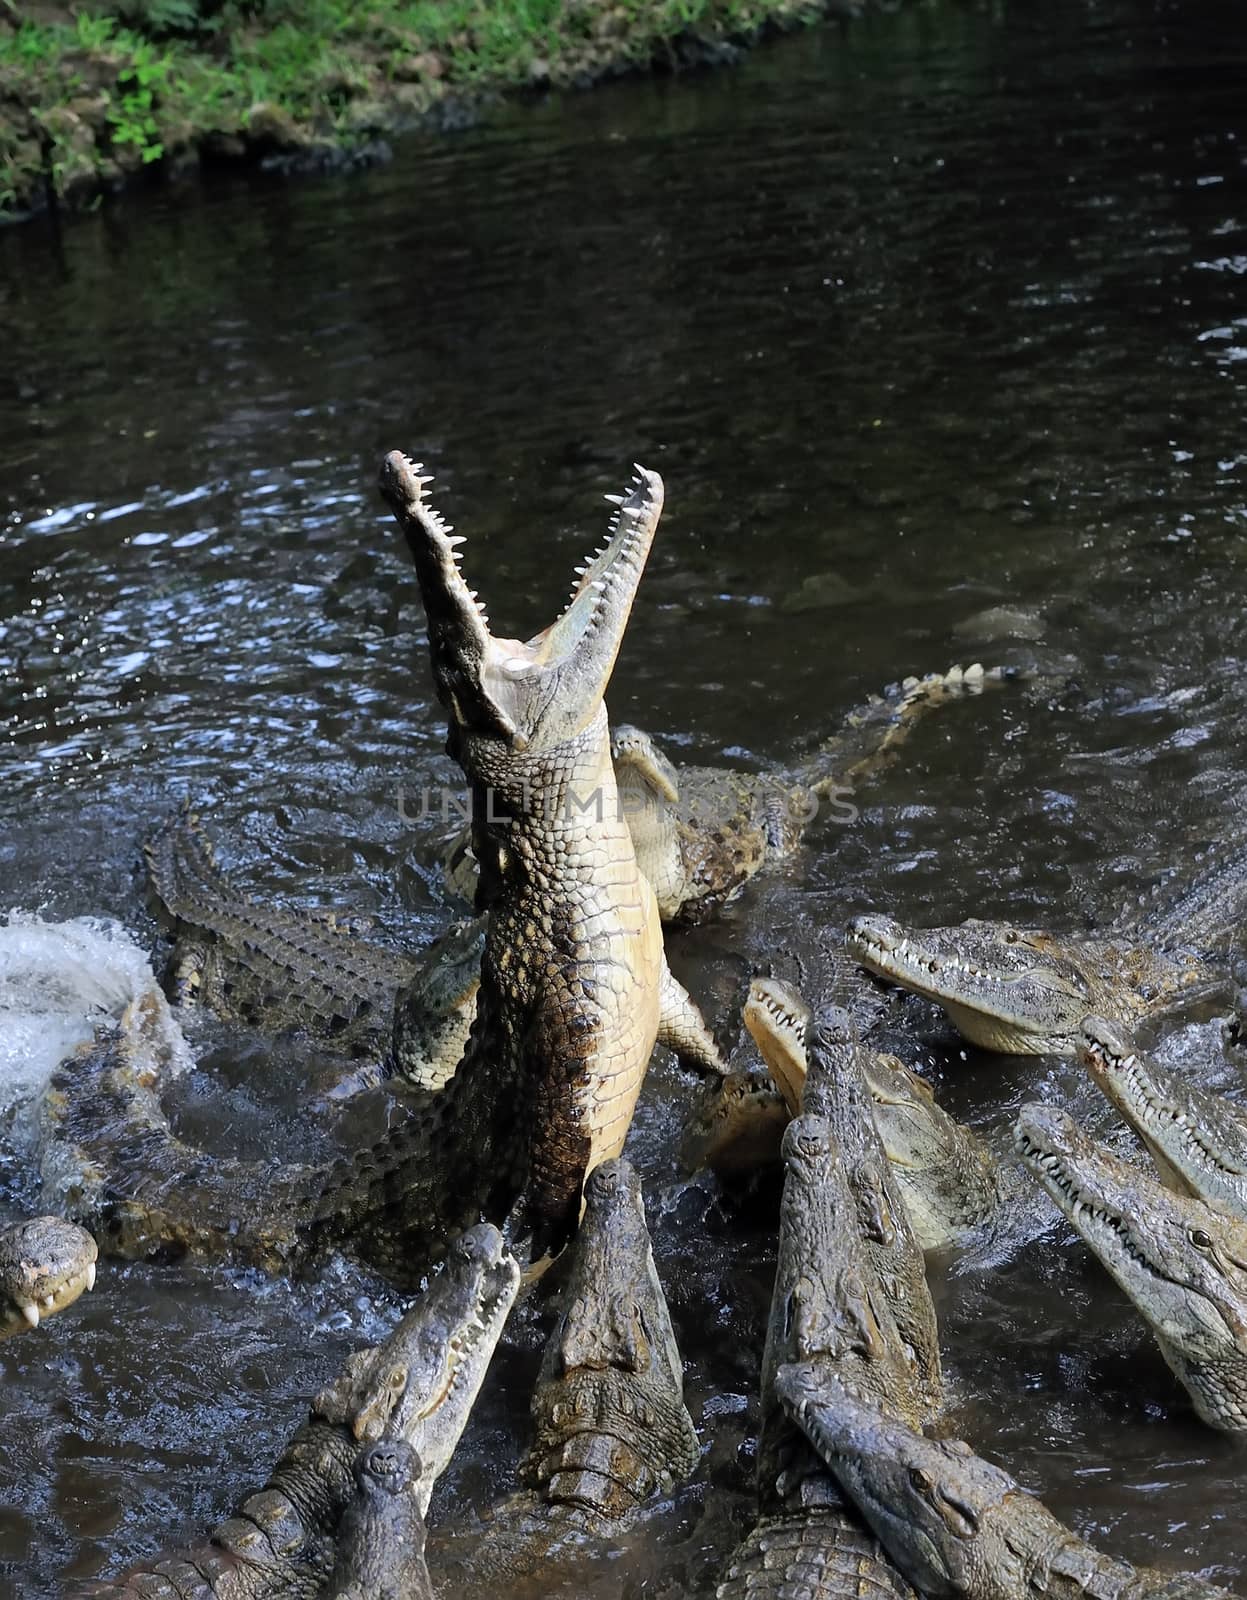 Group crocodile in river. Attack crocodile (crocodylus rhombifer)